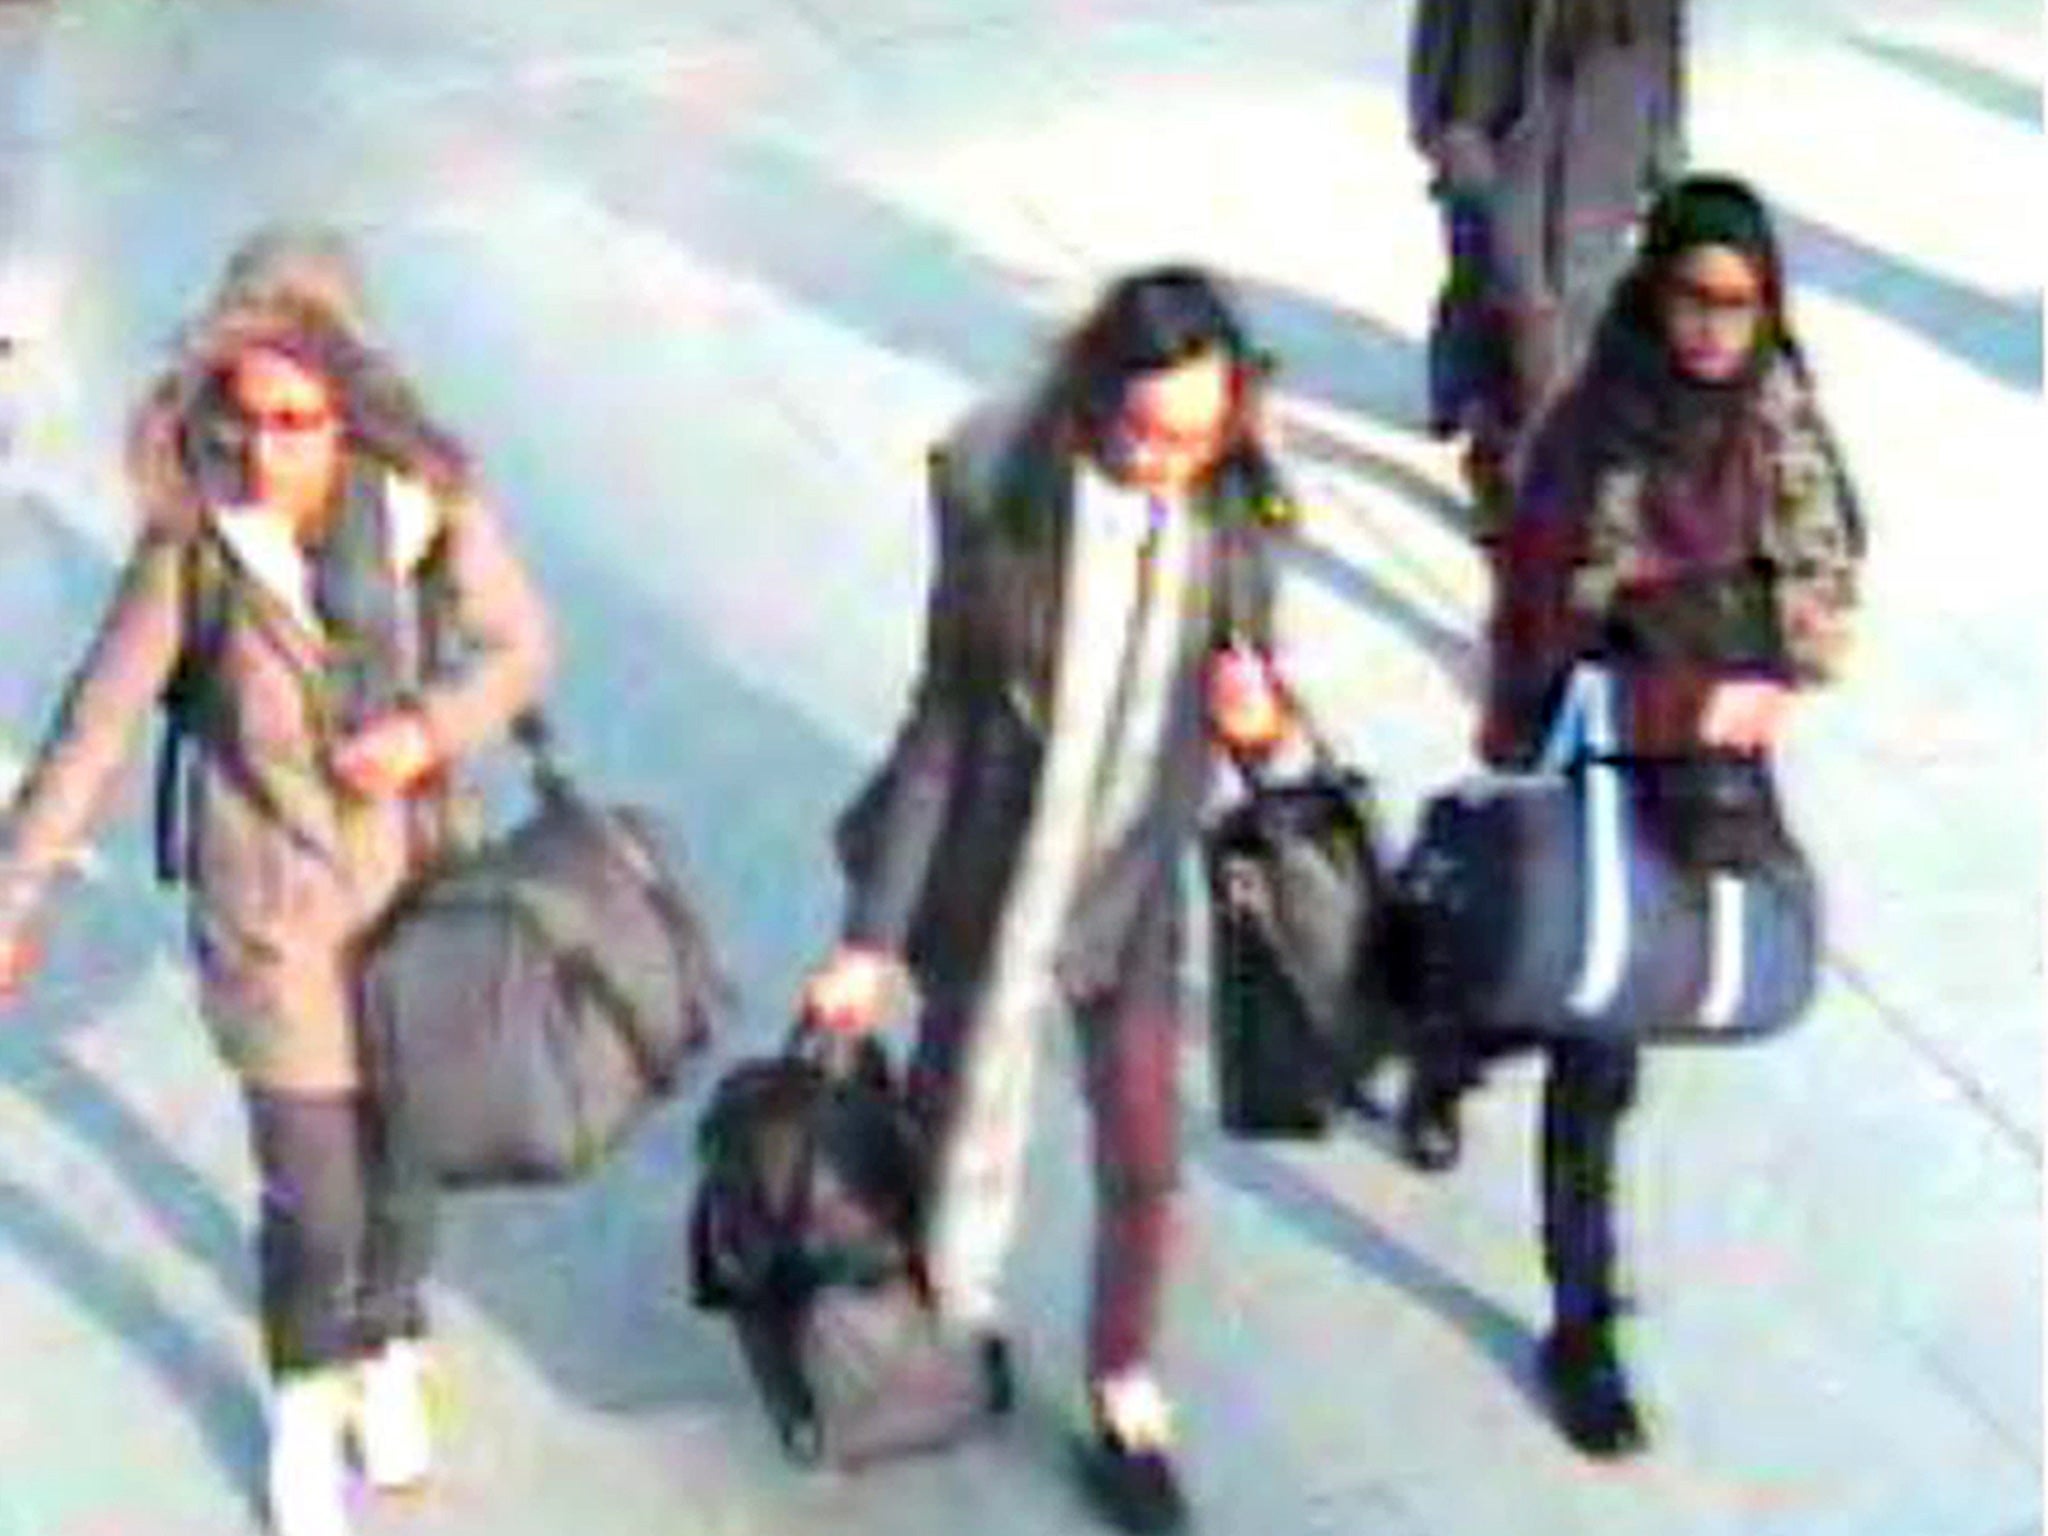 Amira Abase, Kadiza Sultana and Shamima Begum were caught on CCTV at Gatwick airport on their way to Syria via Turkey